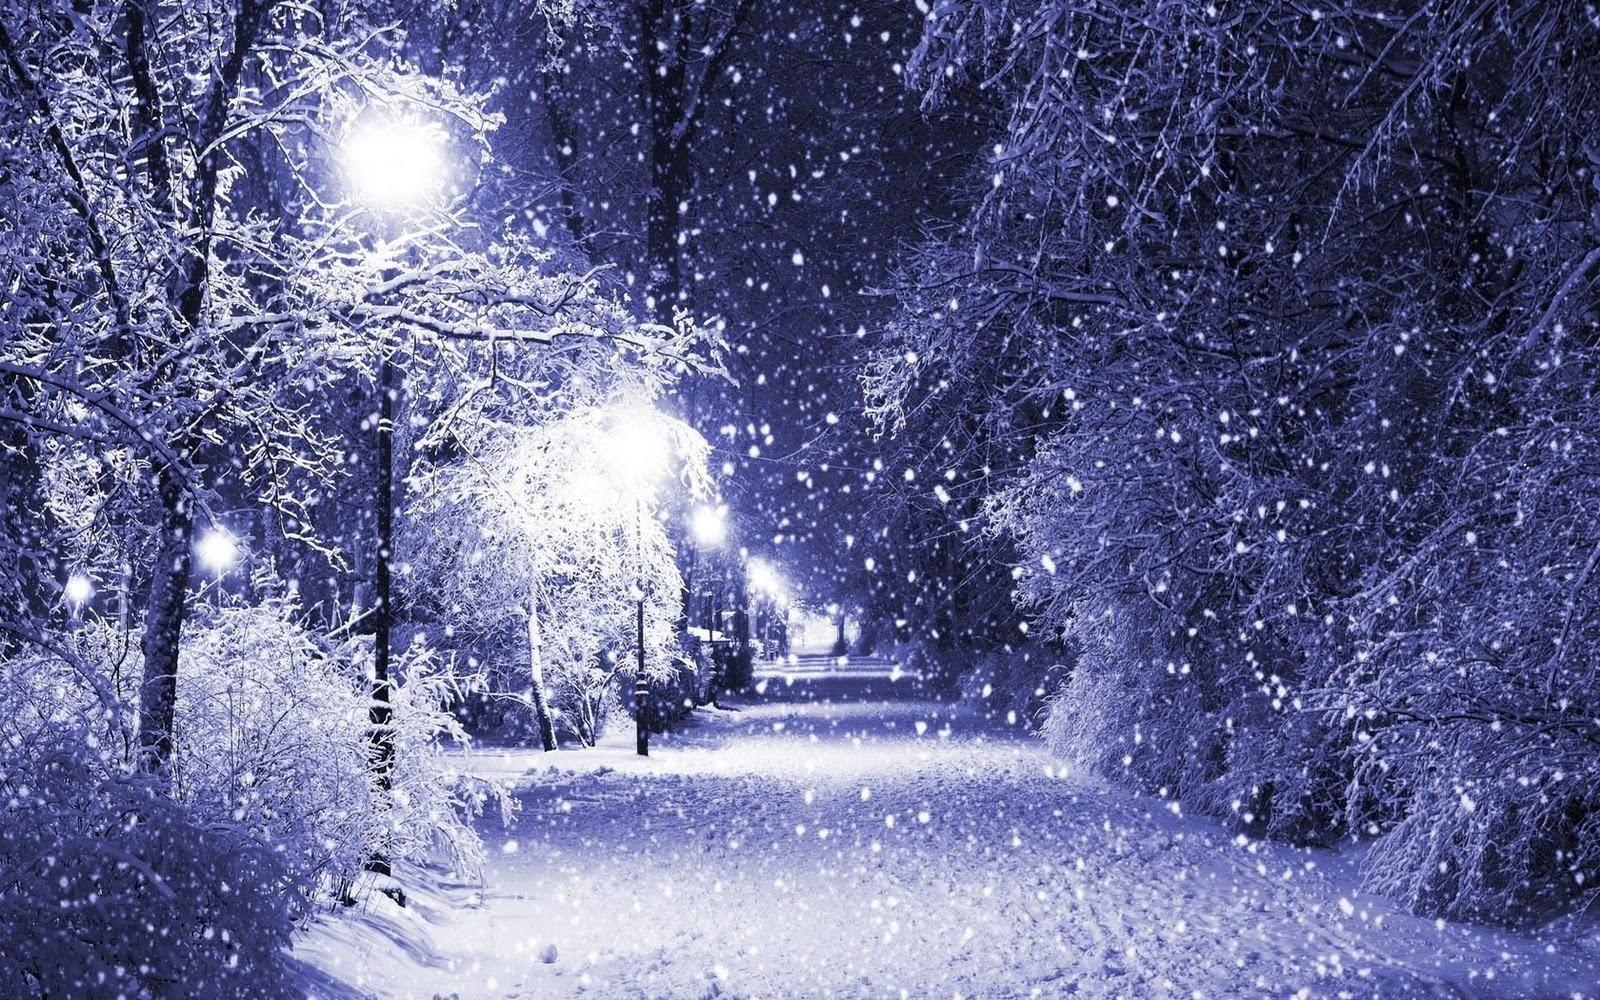 World Most Beautiful Snow Scenes. night scene wallpaper